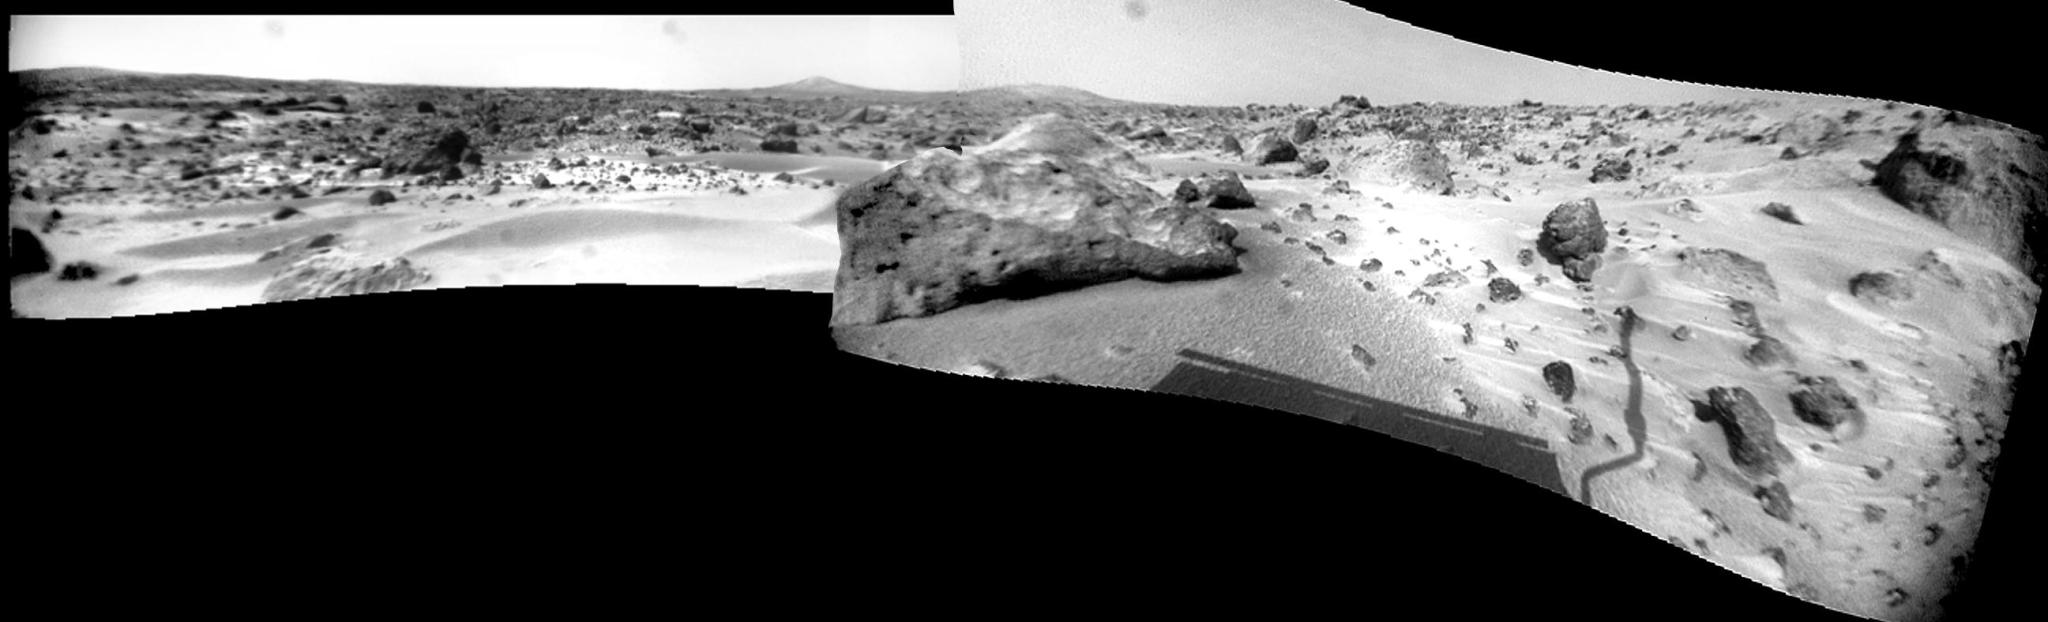 NASA’s Sojourner Mars rover 